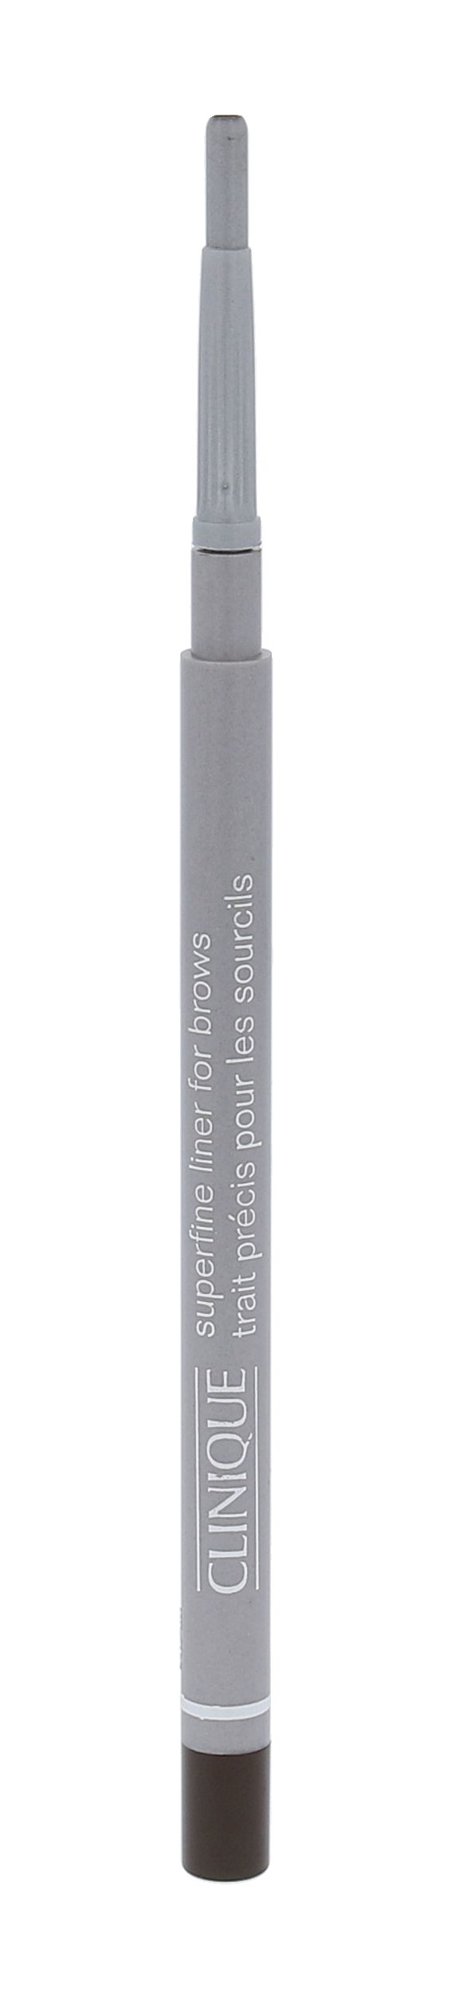 Clinique Superfine Liner For Brows 0,08g antakių pieštukas